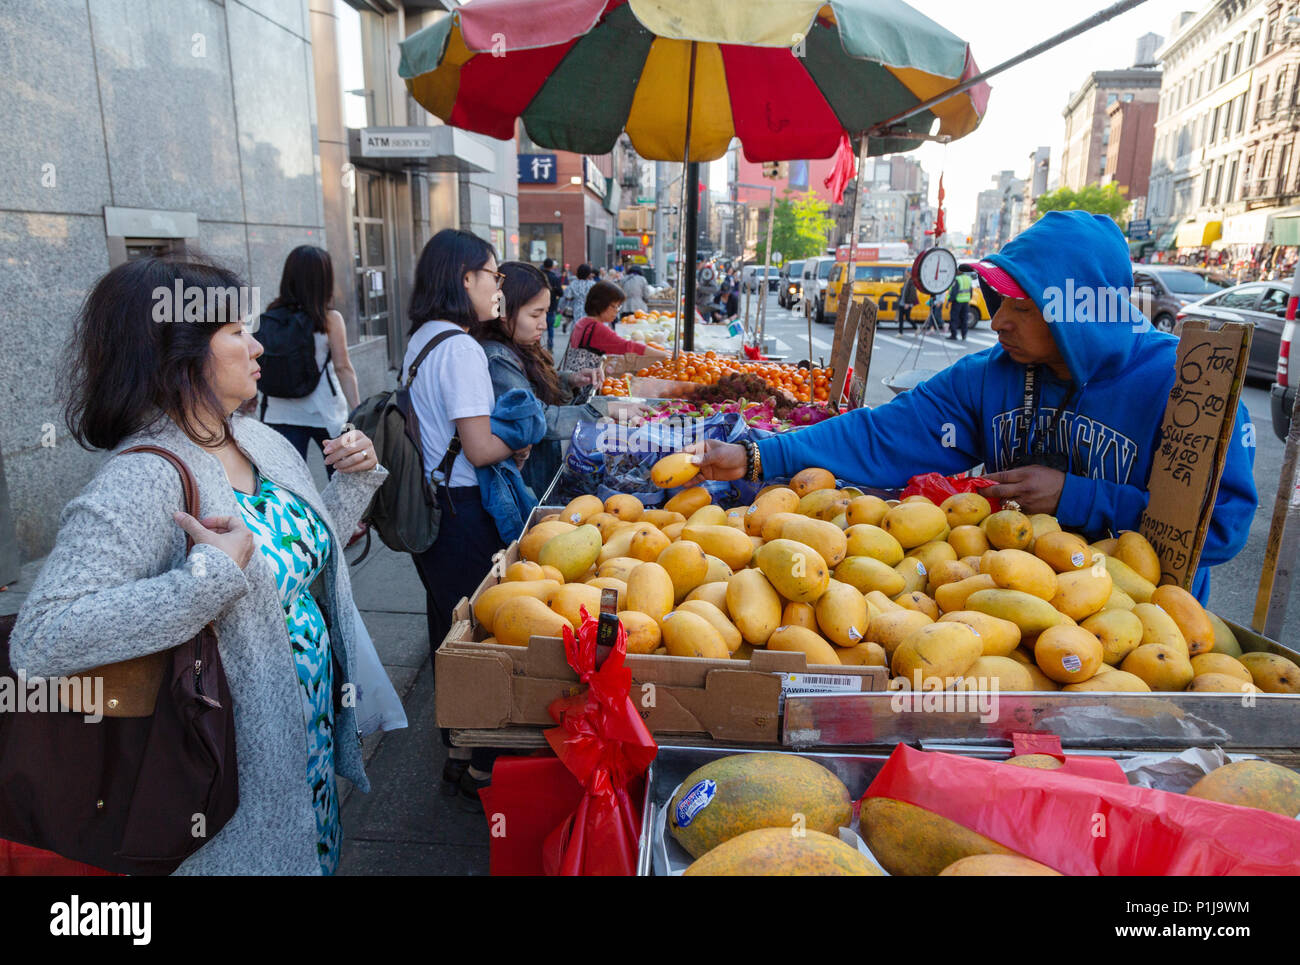 Chinatown New York city - people shopping at roadside stalls, Chinatown street market, Chinatown, New York USA Stock Photo